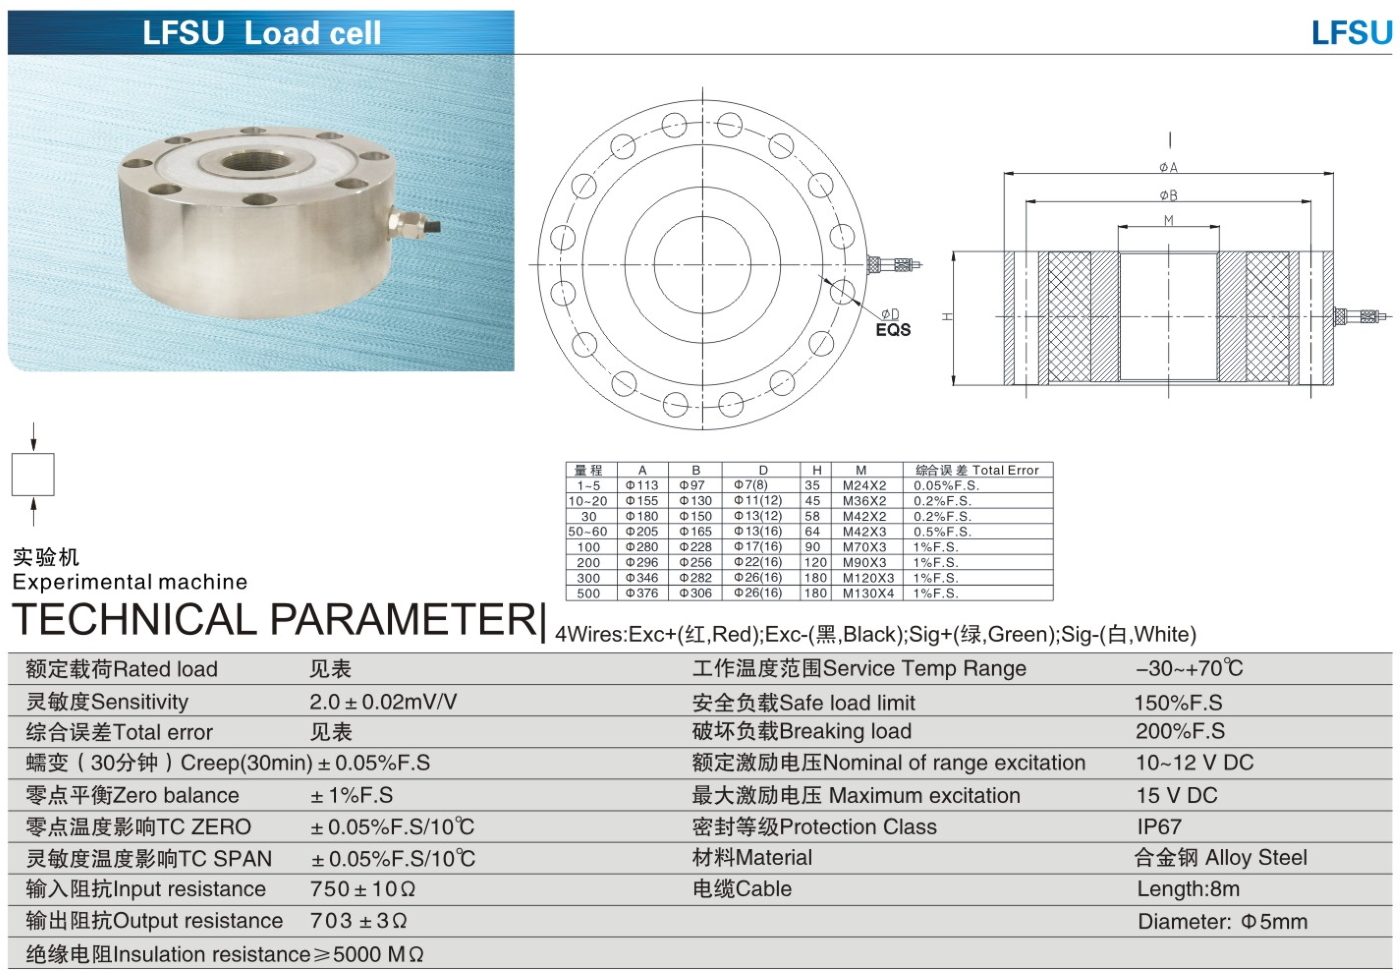 img/loadcell-images/pancake-type/KELI_LFSU_Loadcell-TTM_Teknoloji.jpg